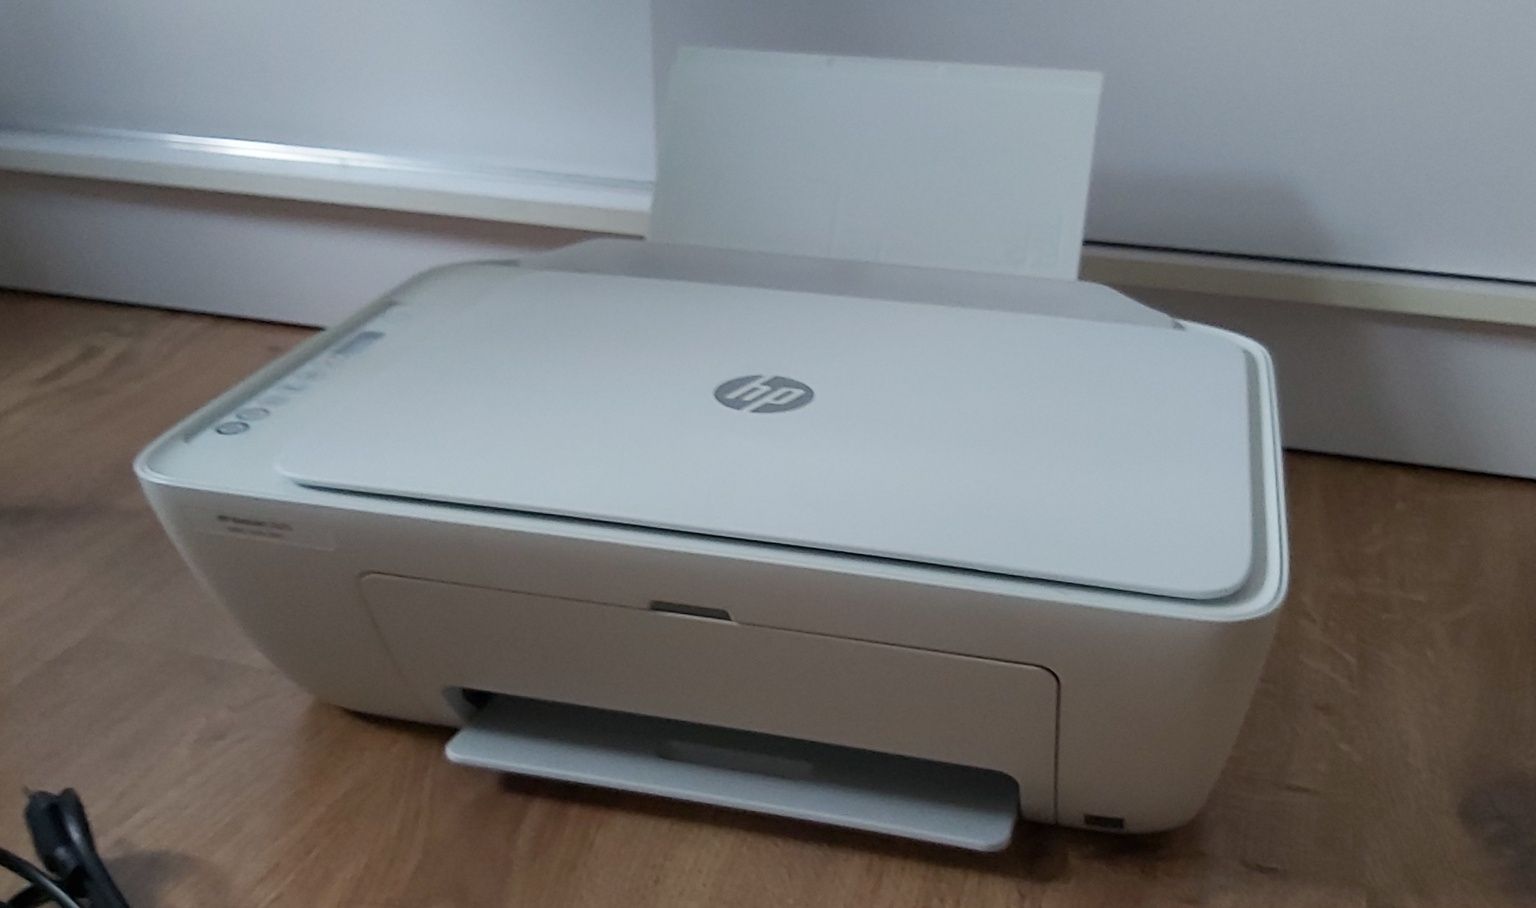 Drukarka wielofunkcyjna HP Deskjet 2620 Print Scan Copy